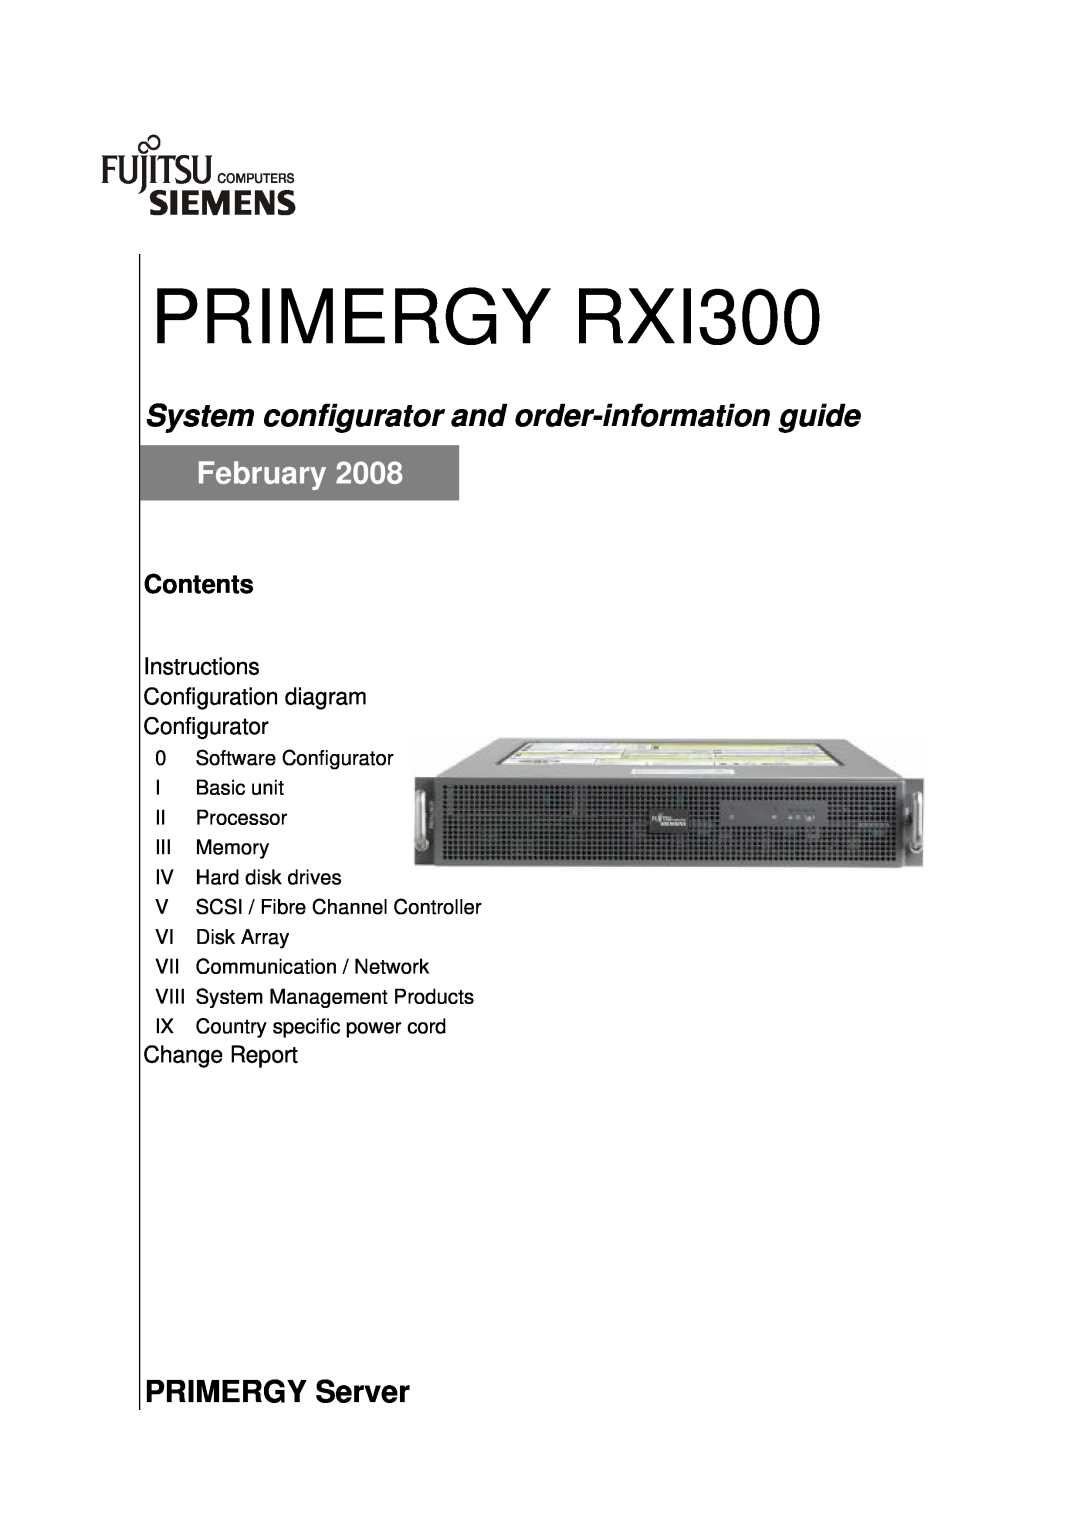 Fujitsu manual PRIMERGY RXI300, System configurator and order-information guide, February, PRIMERGY Server, Contents 